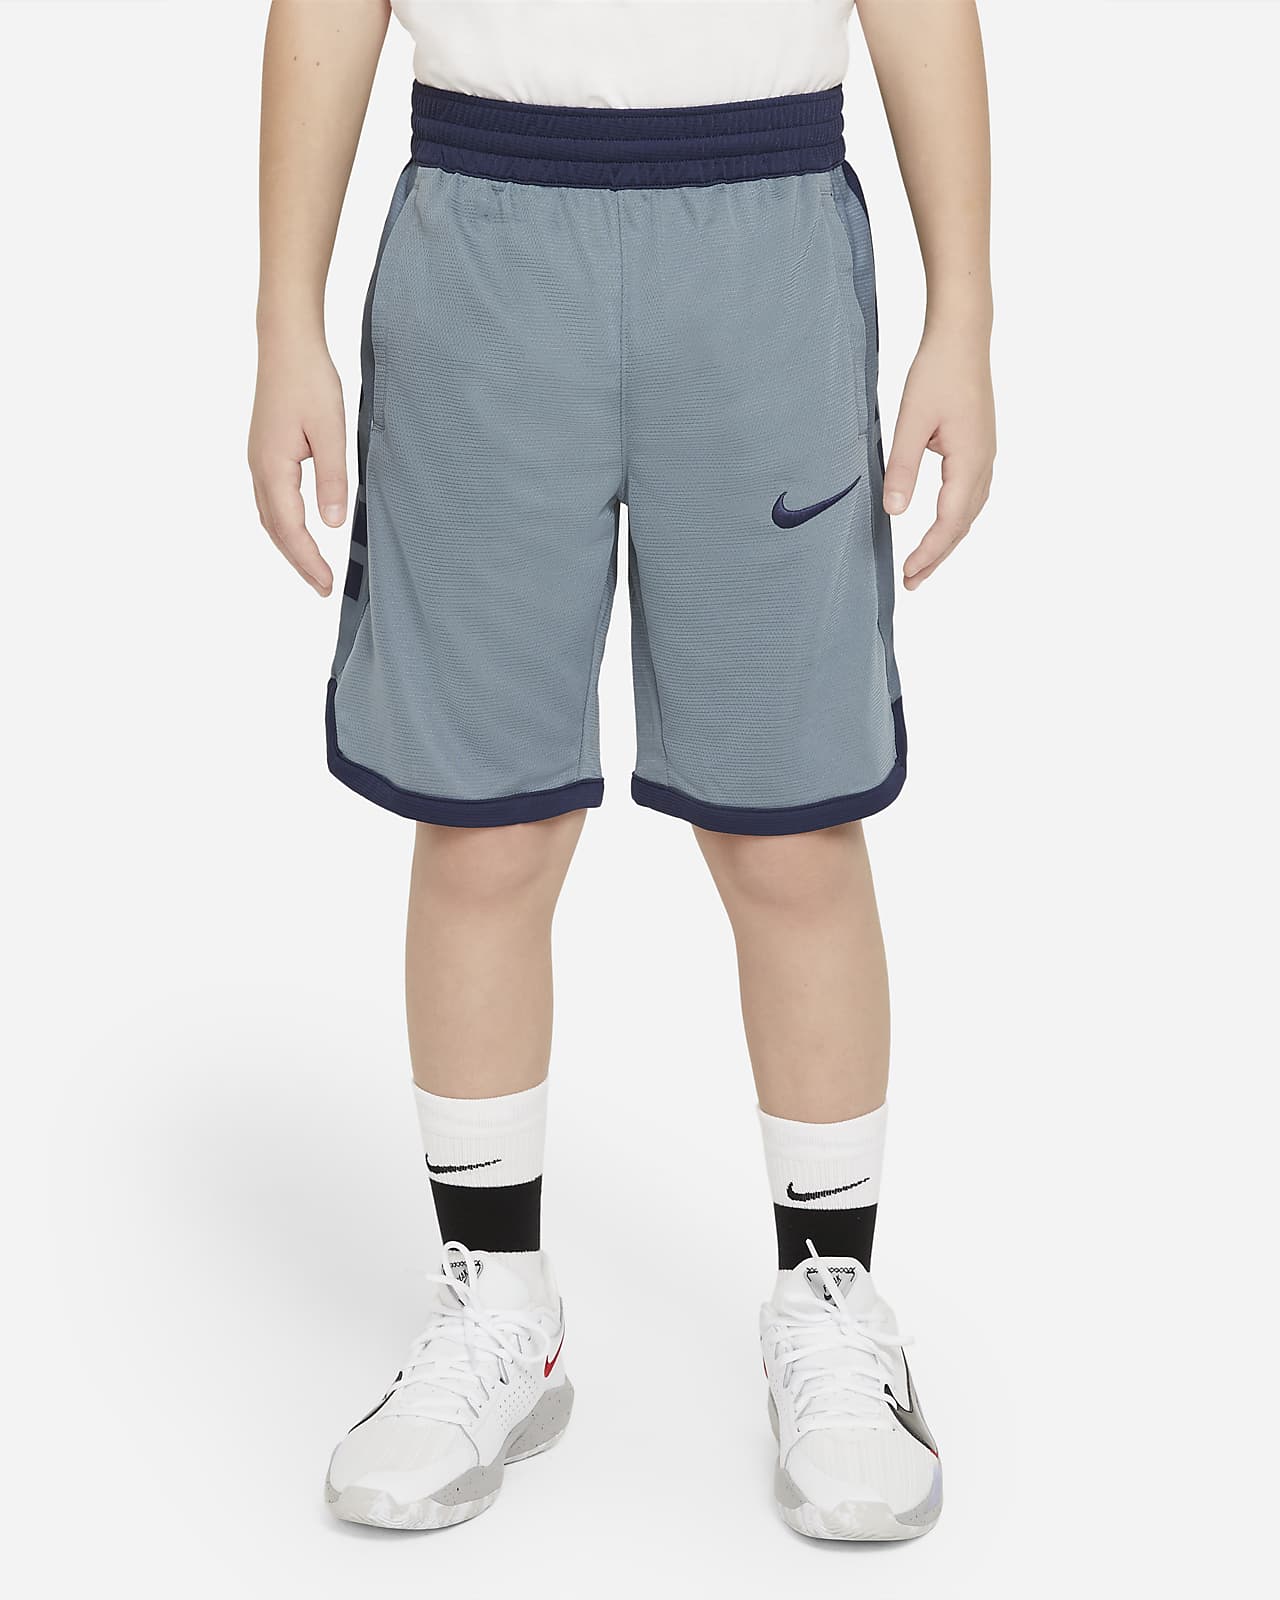 nike elite basketball shorts